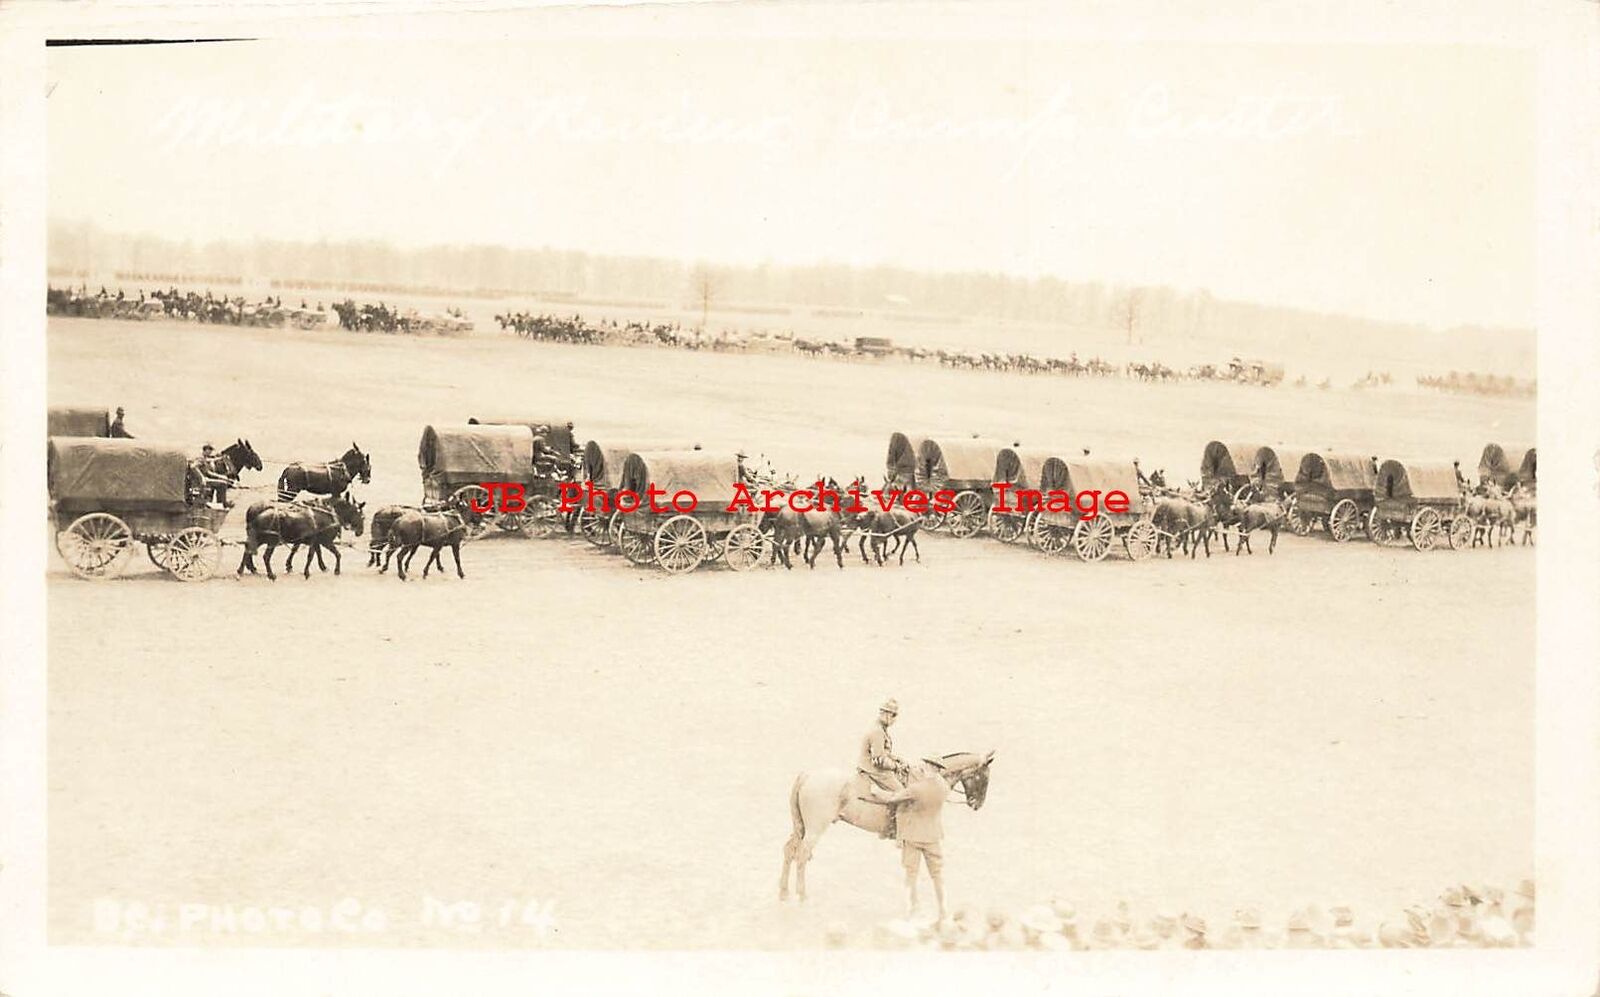 MI, Battle Creek, Michigan, RPPC, Camp Custer, Military Review, BC Photo No 14